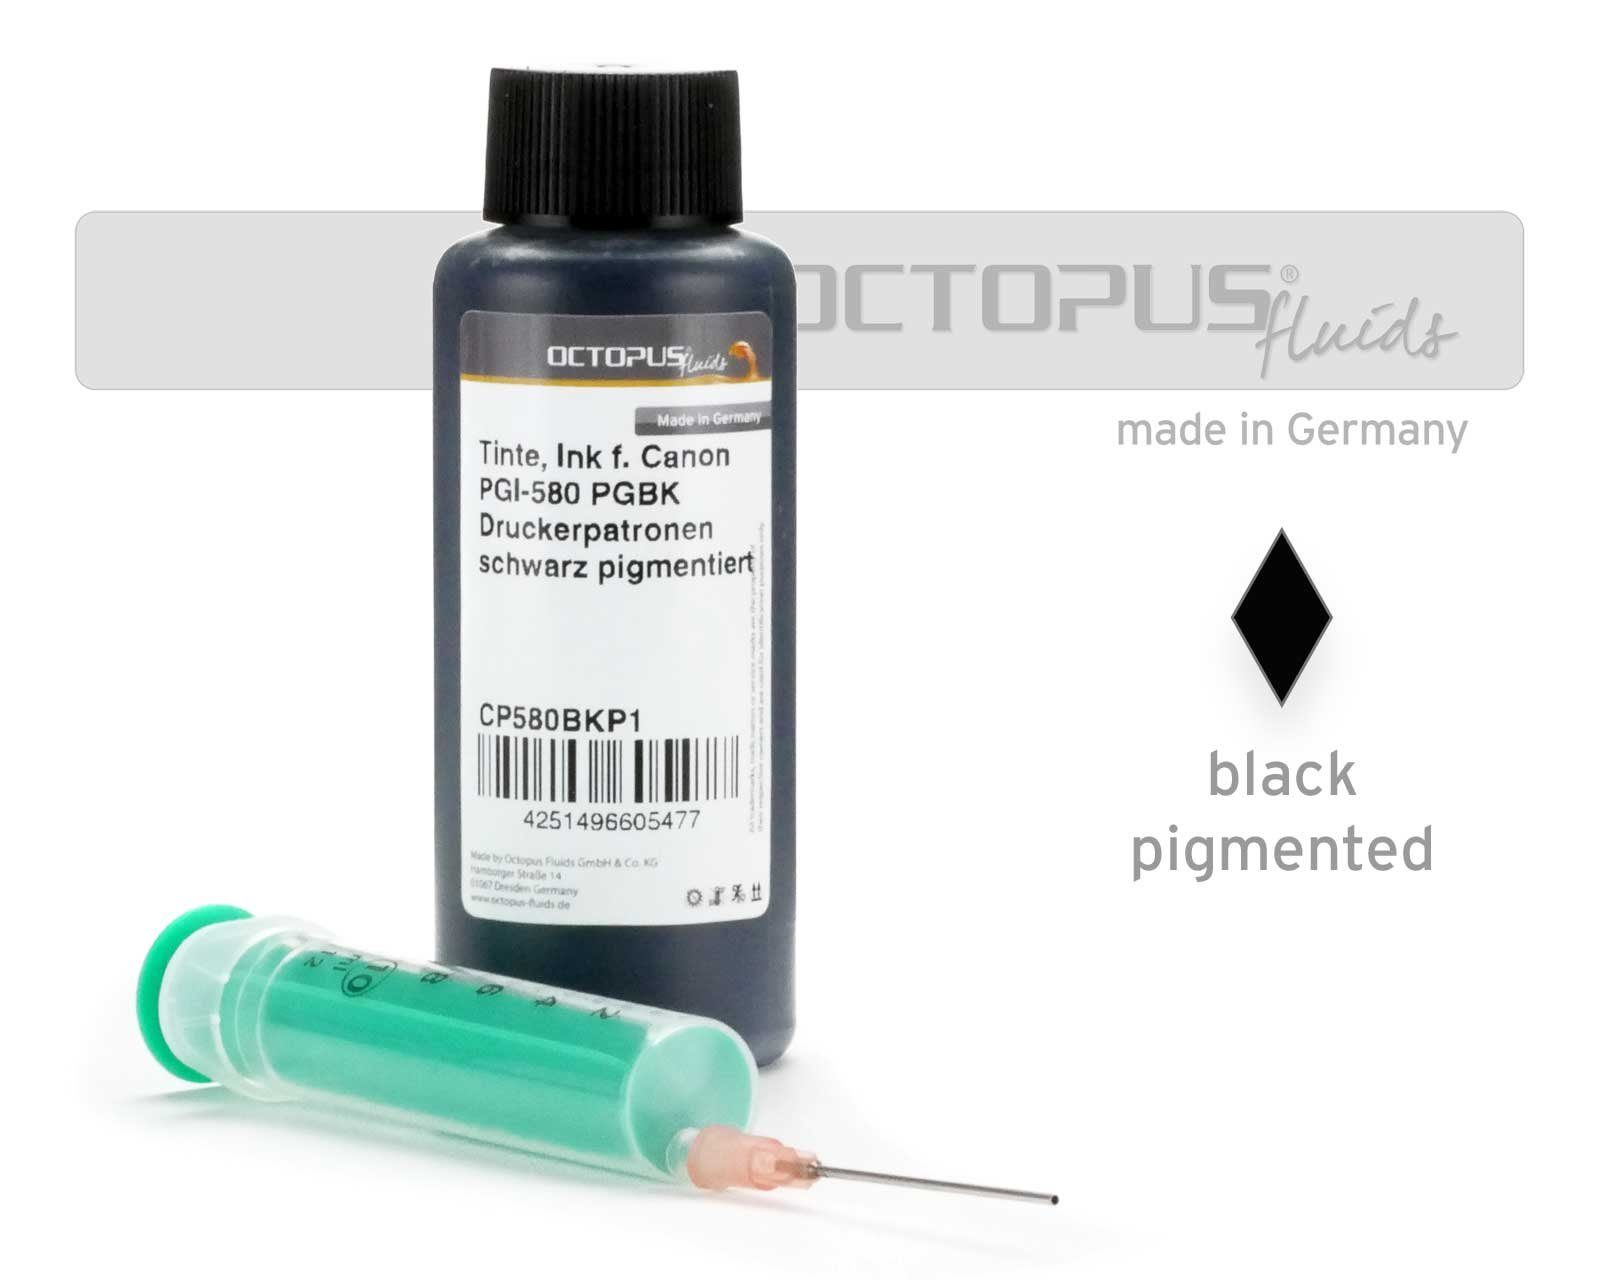 OCTOPUS Fluids Ink for Canon PGI-580 PGBK black pigmented with syringe Nachfülltinte (für Canon, 1x 100 ml, Nachfülltinte PGI-580, CLI-581)